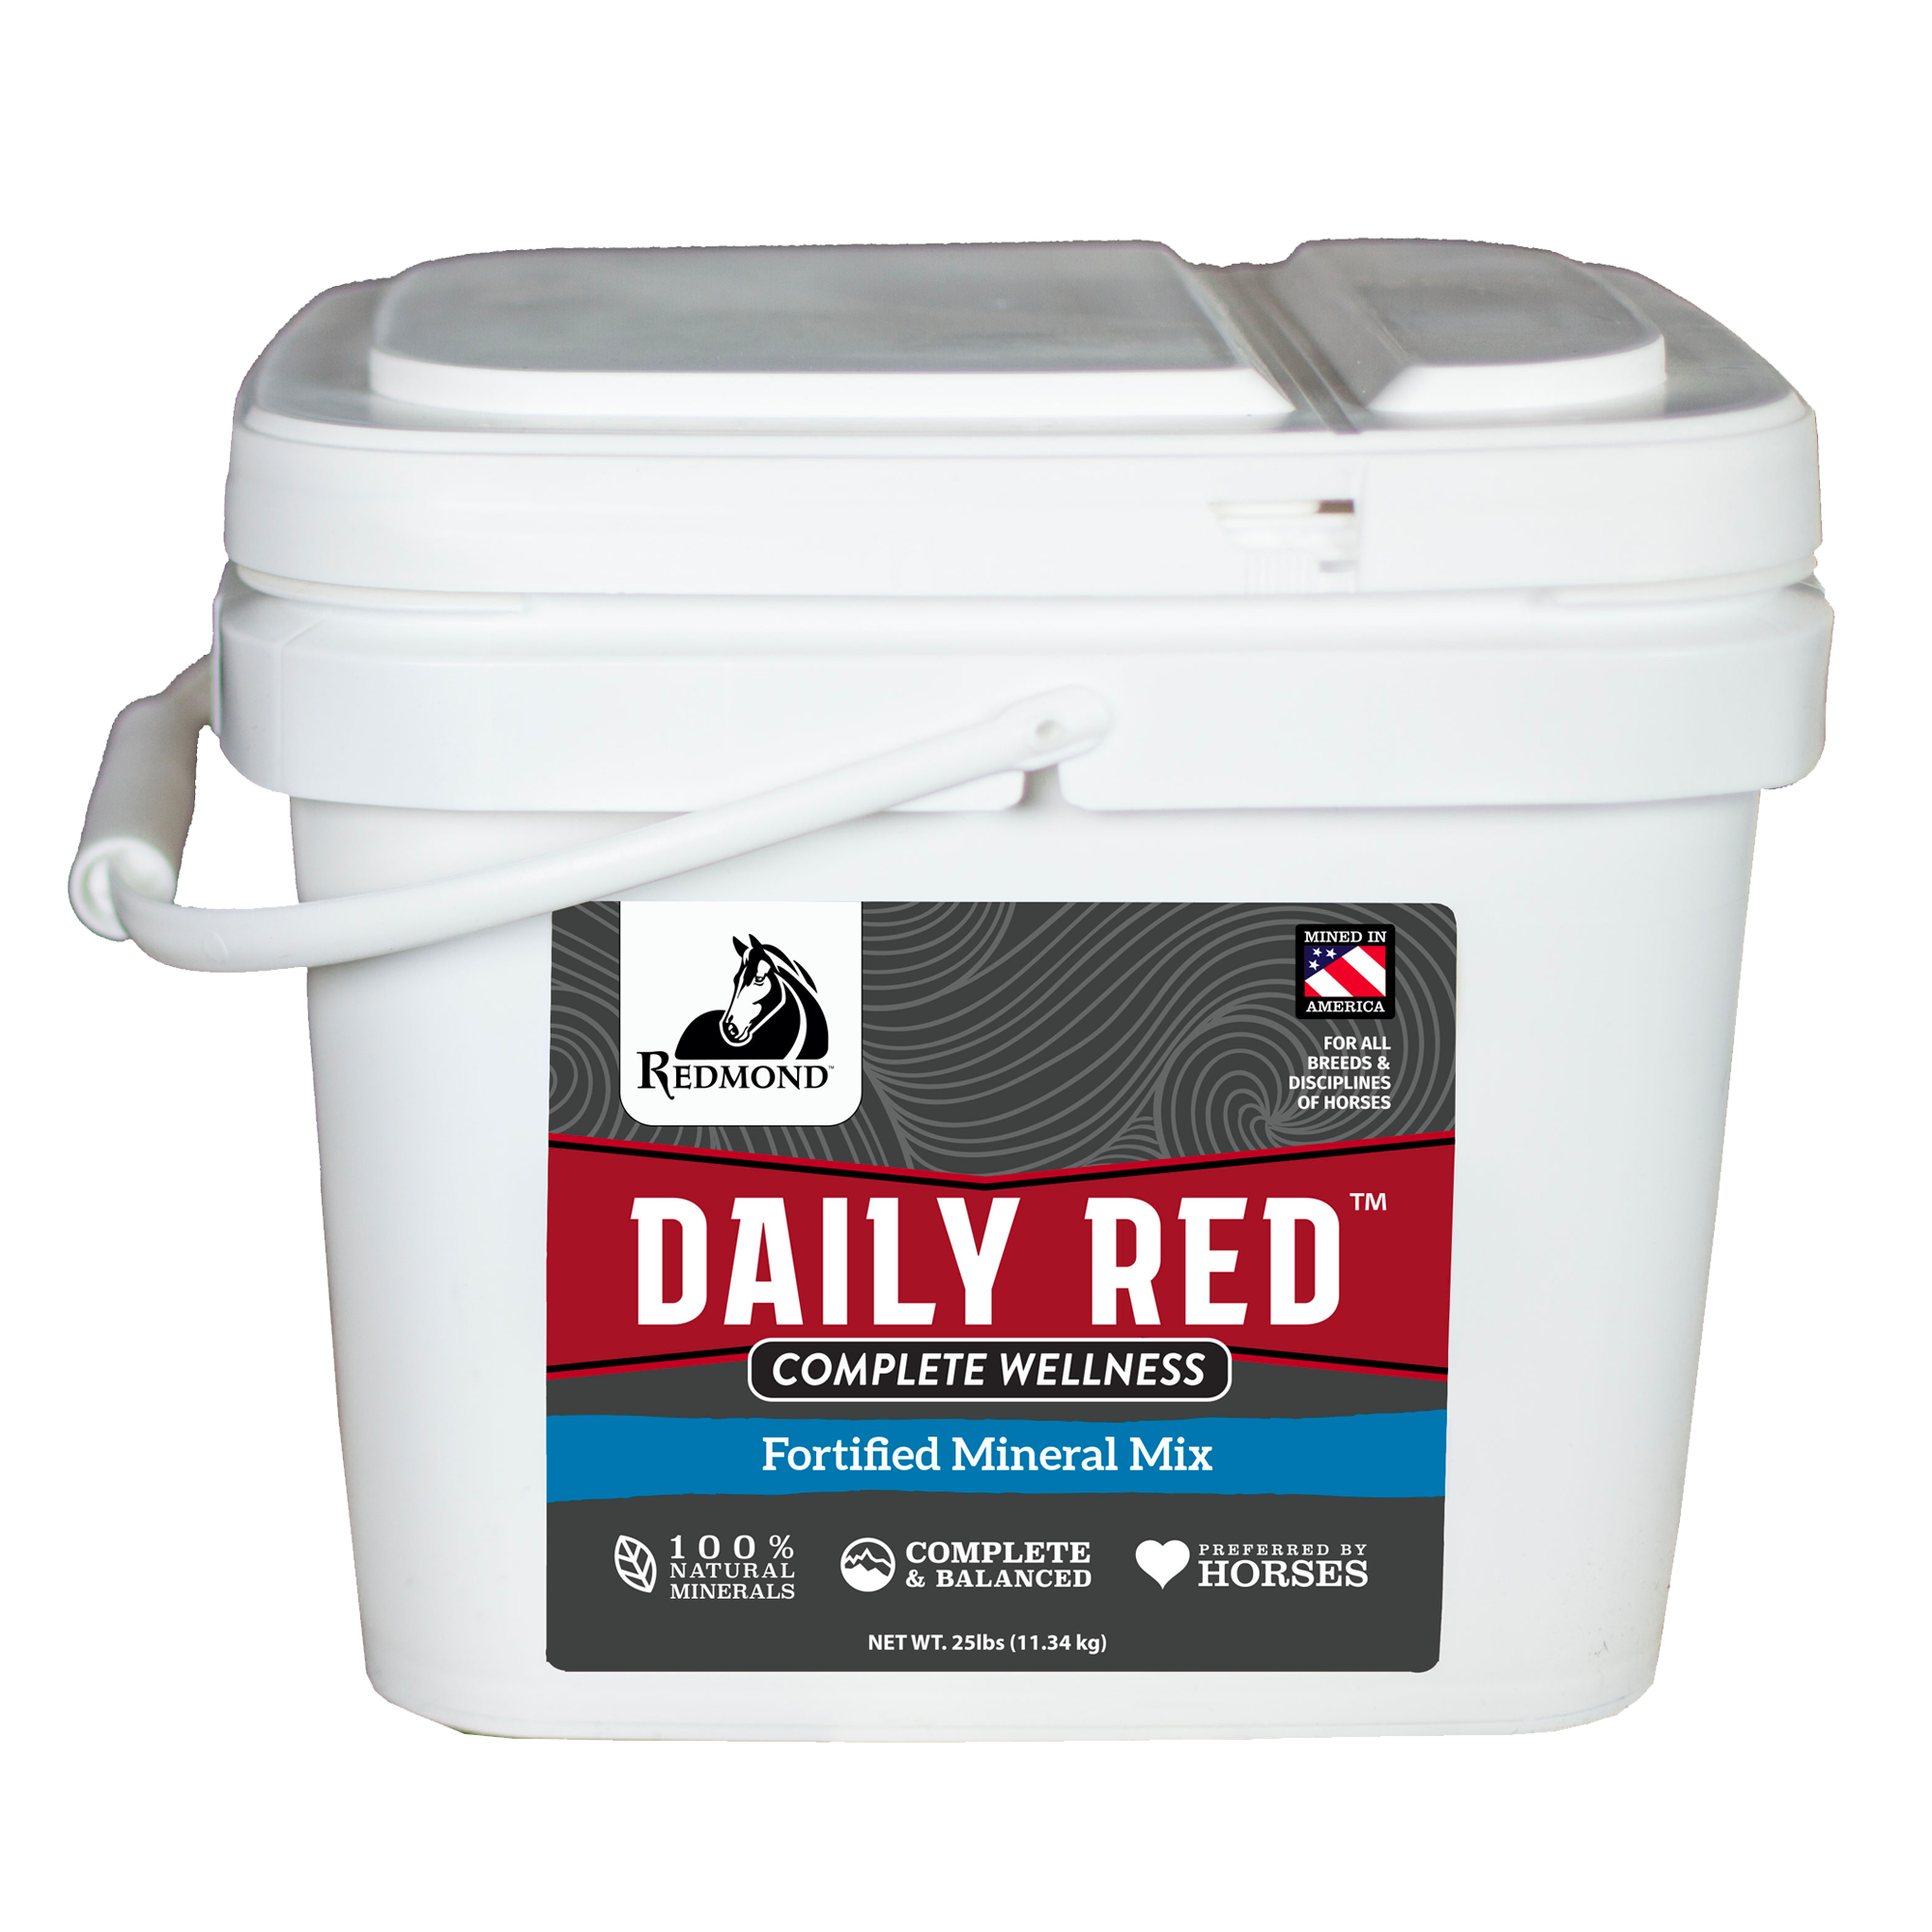 Daily-Red-25lb-bucket_174e51d6-2ad9-4f4c-b241-143f344baac6 (1)